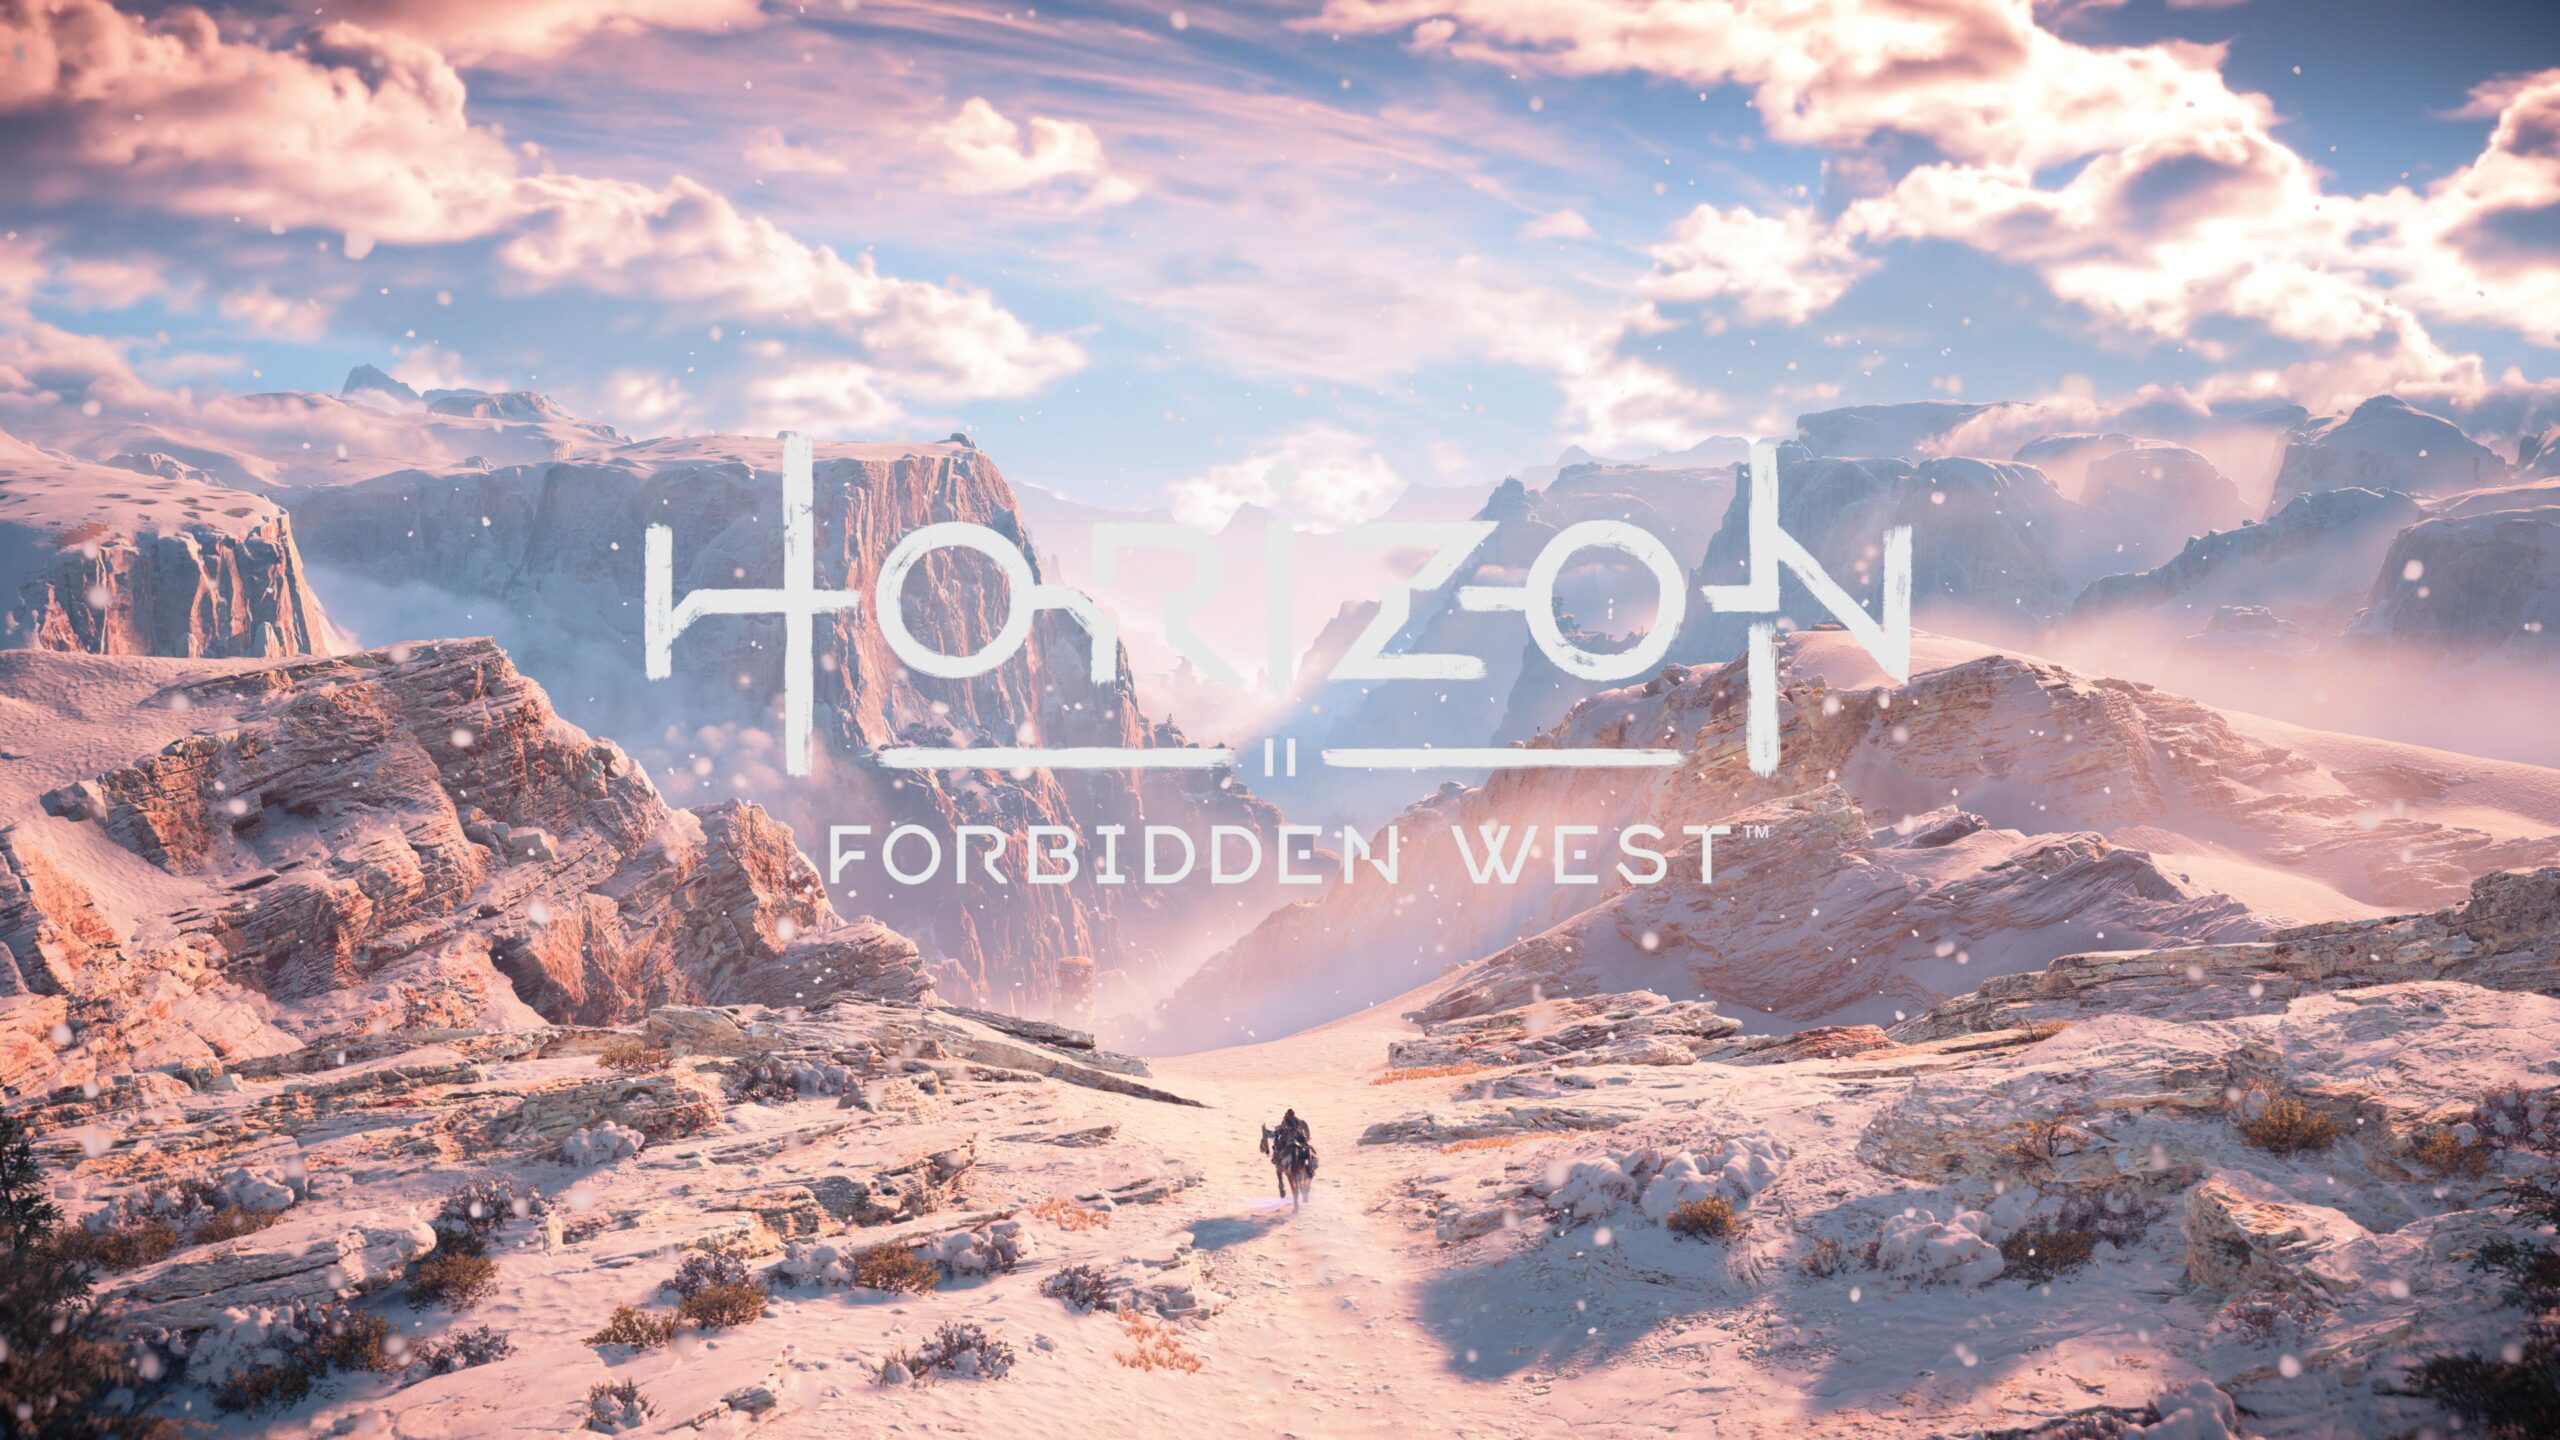 Horizon Forbidden West Review - Game on Aus